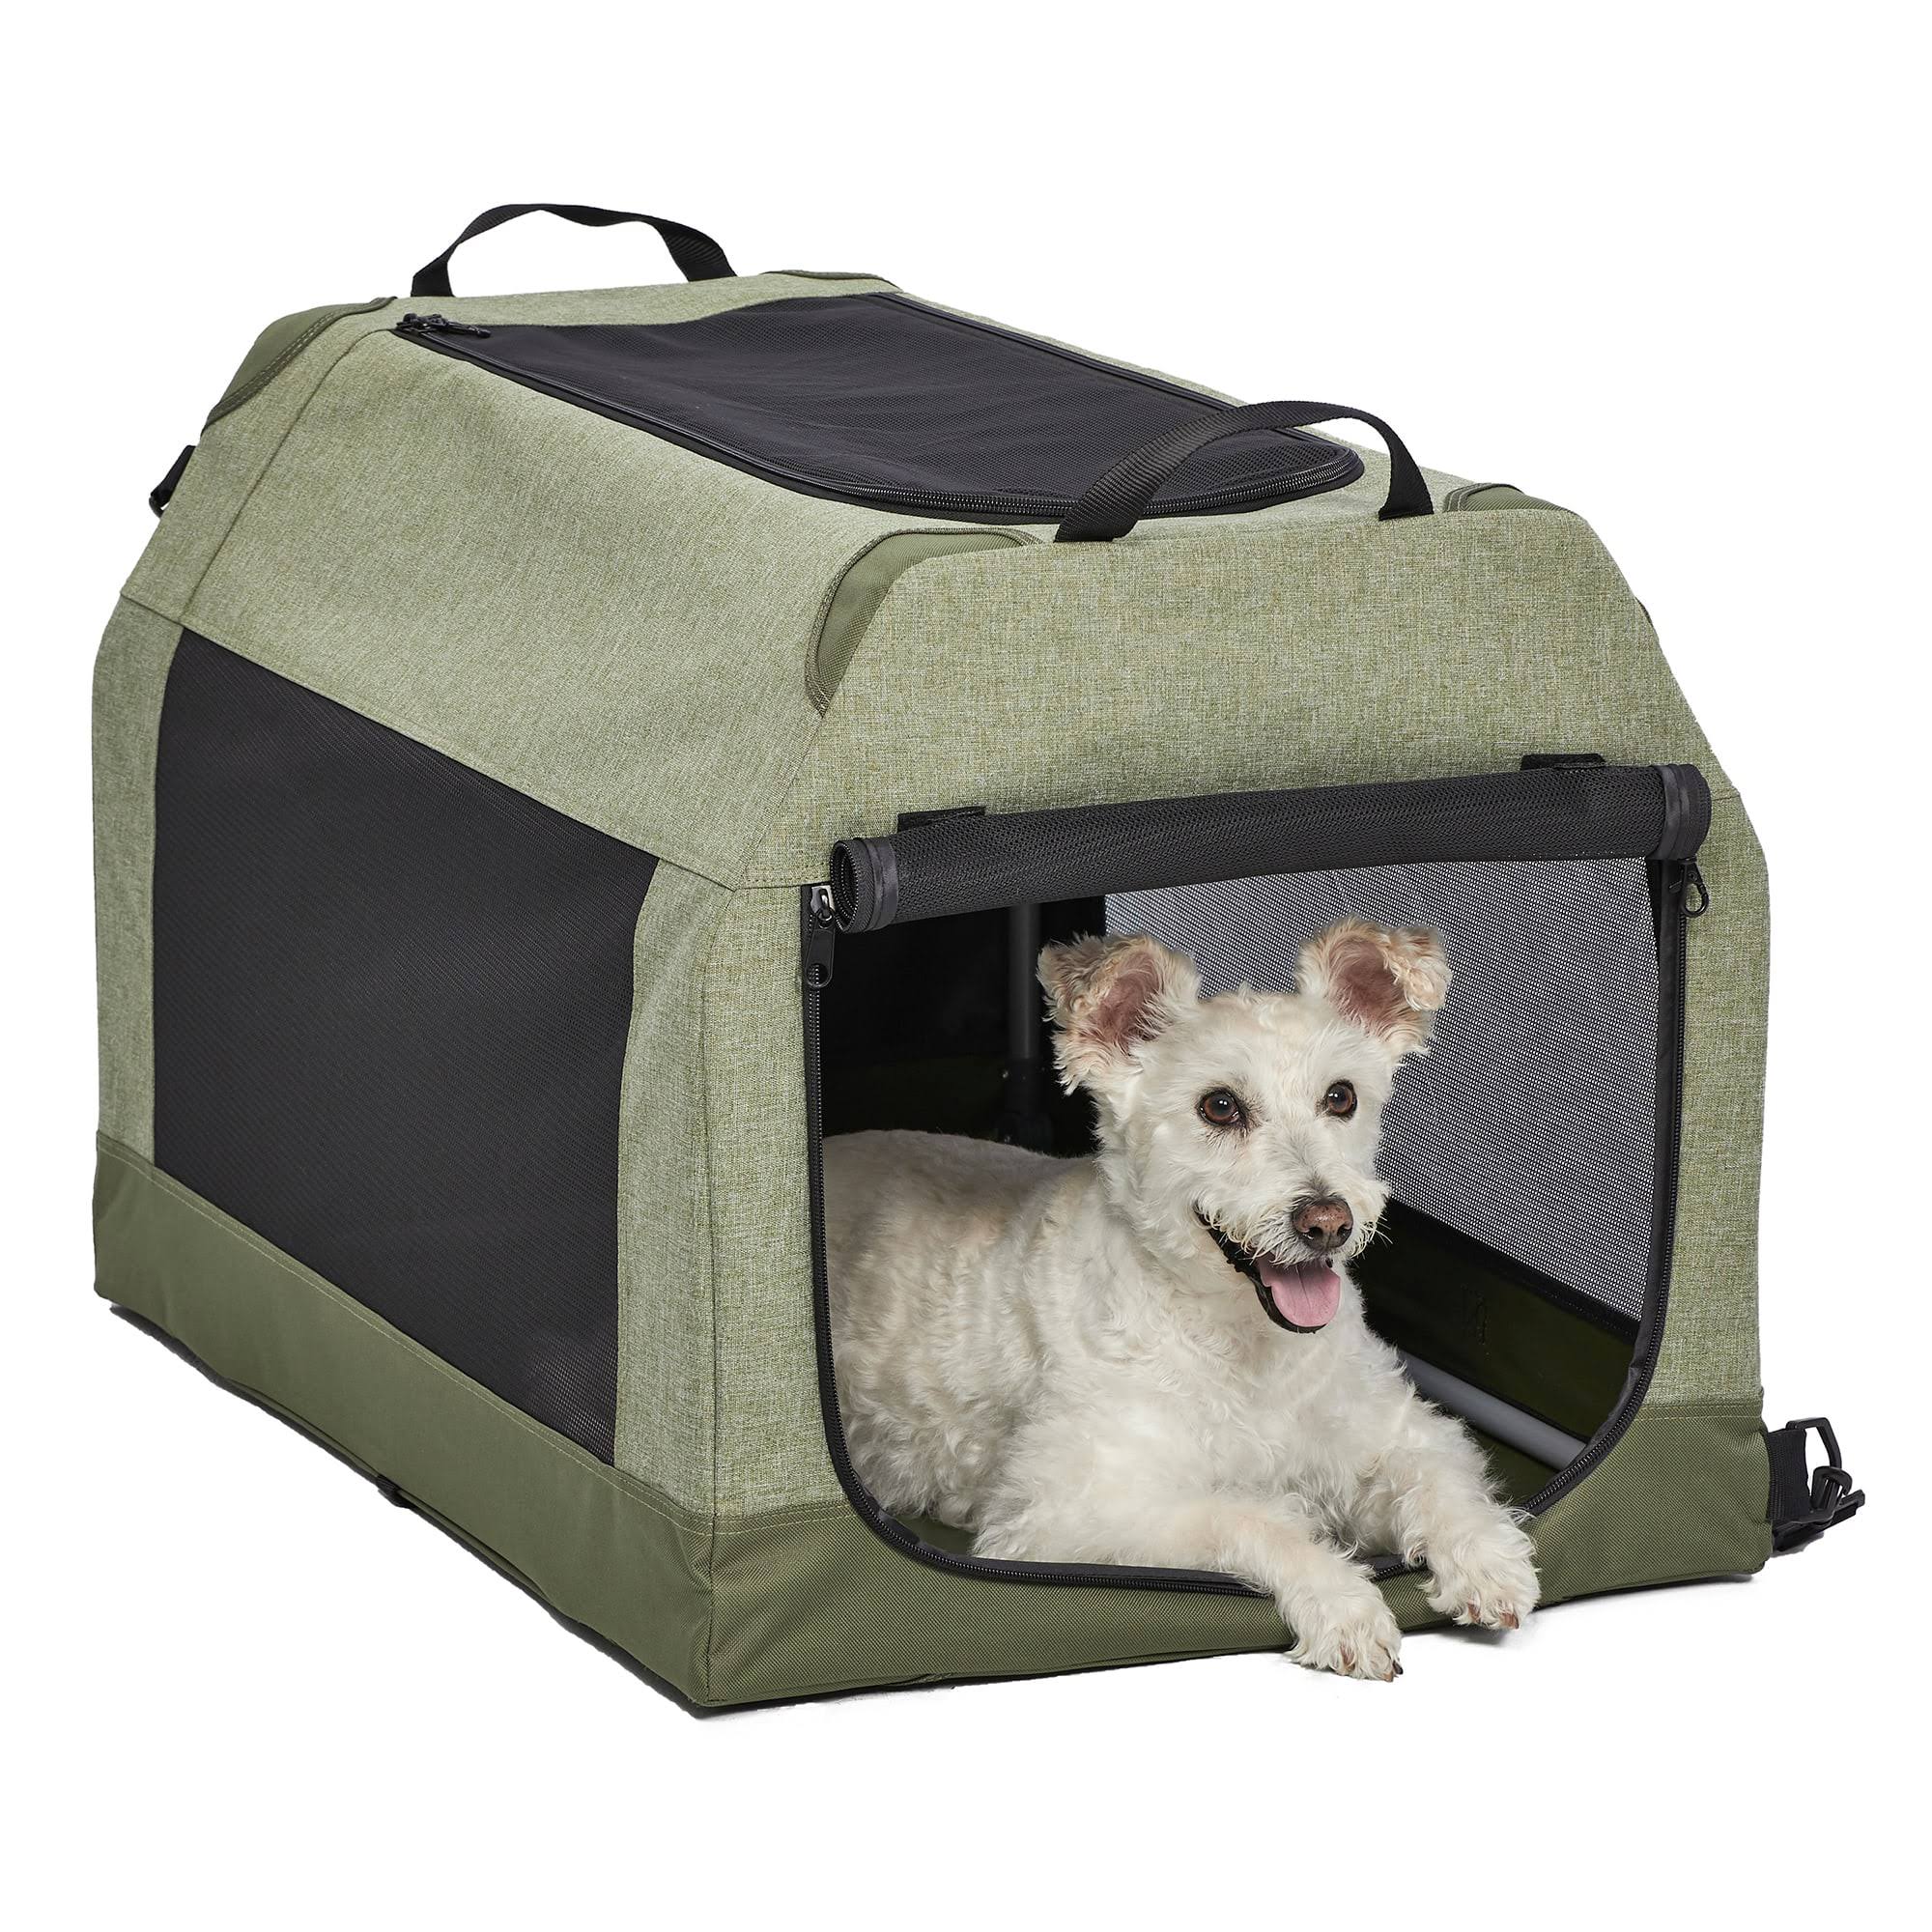 Midwest Canine Camper Dog Tent Crate, Green, Medium